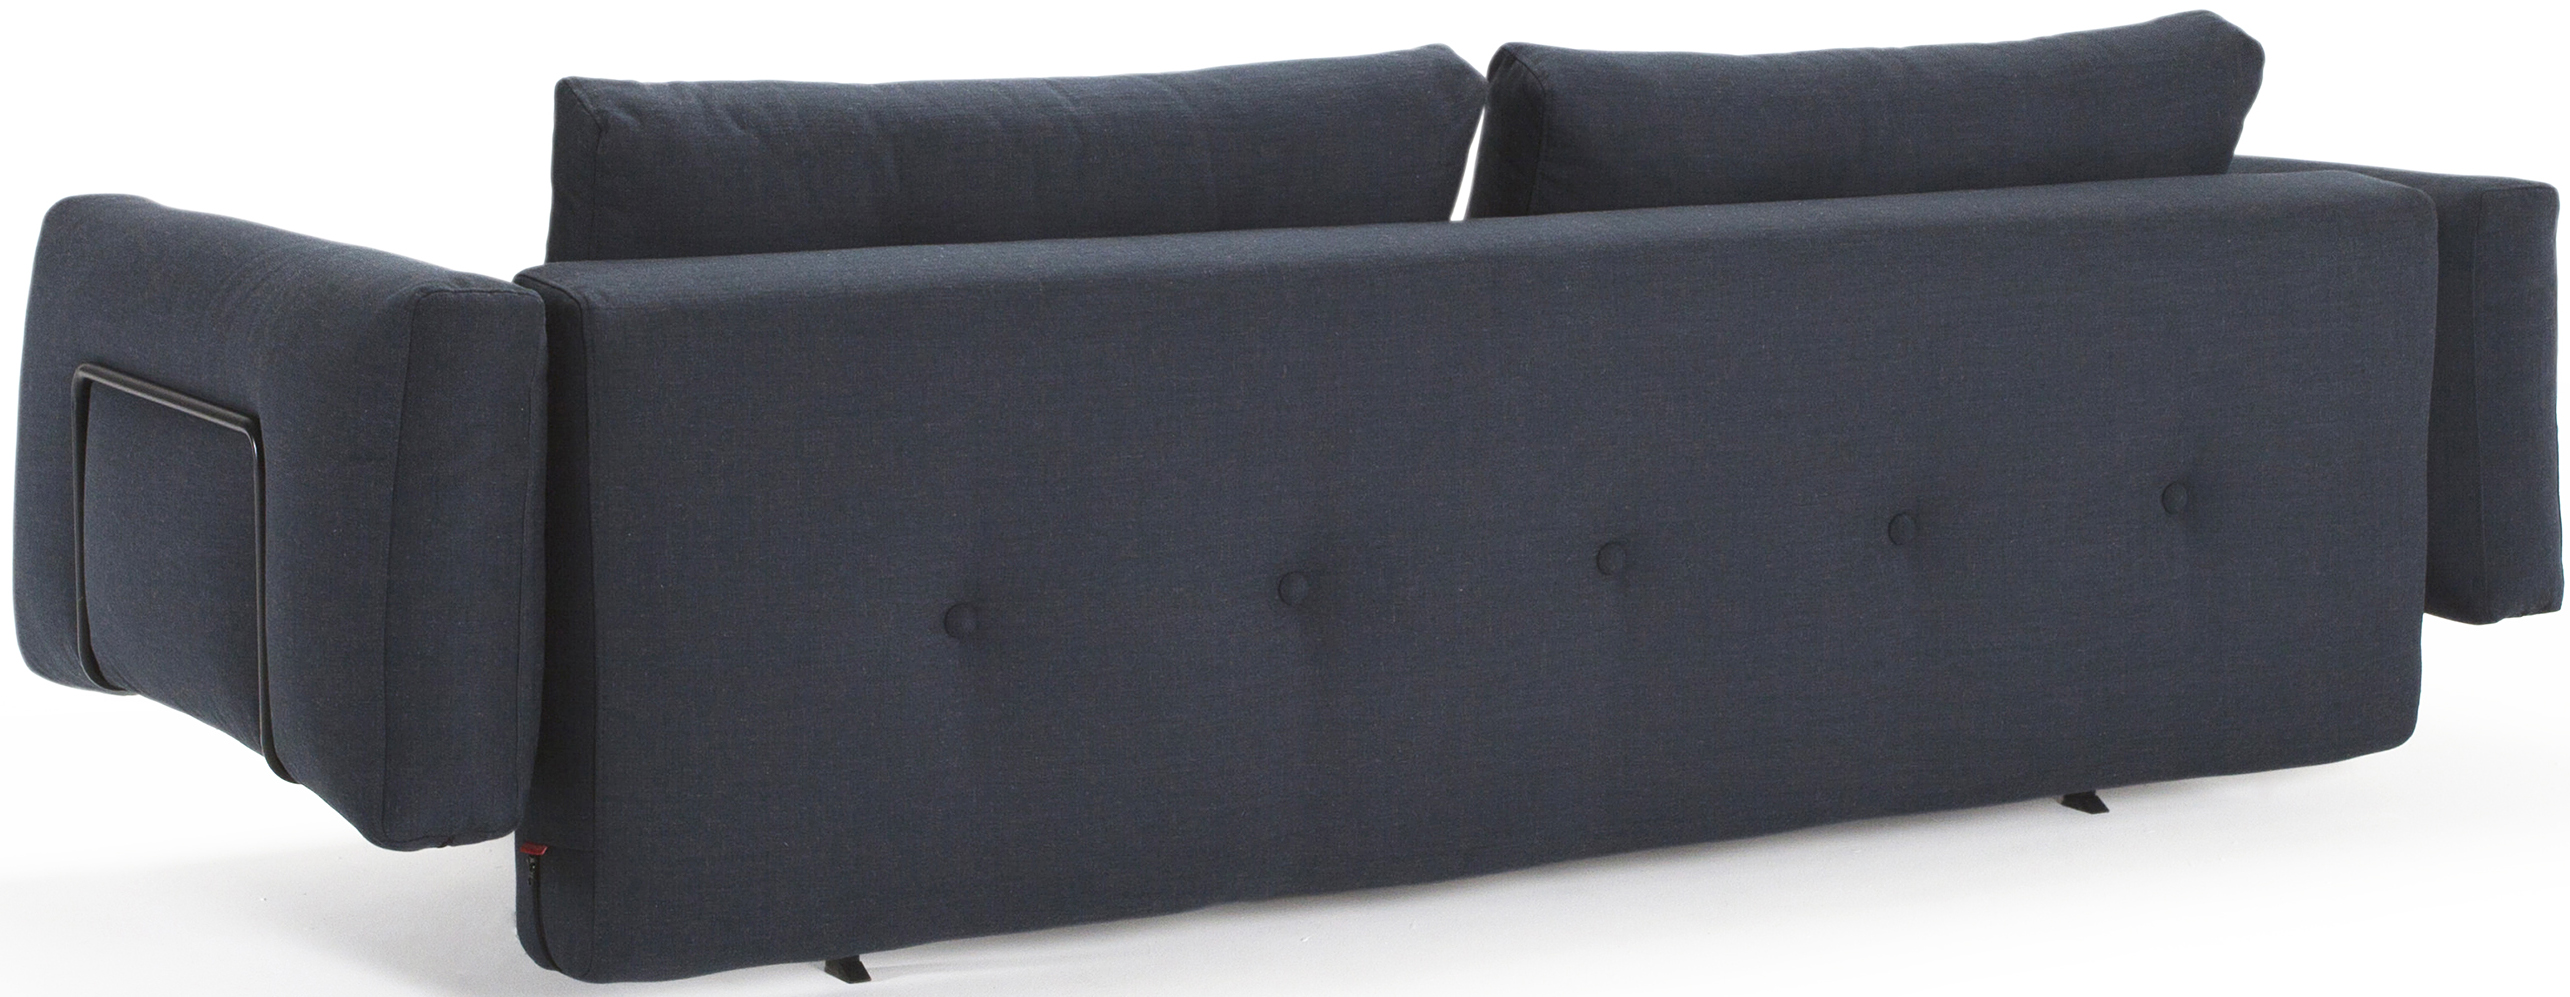 recast sofa